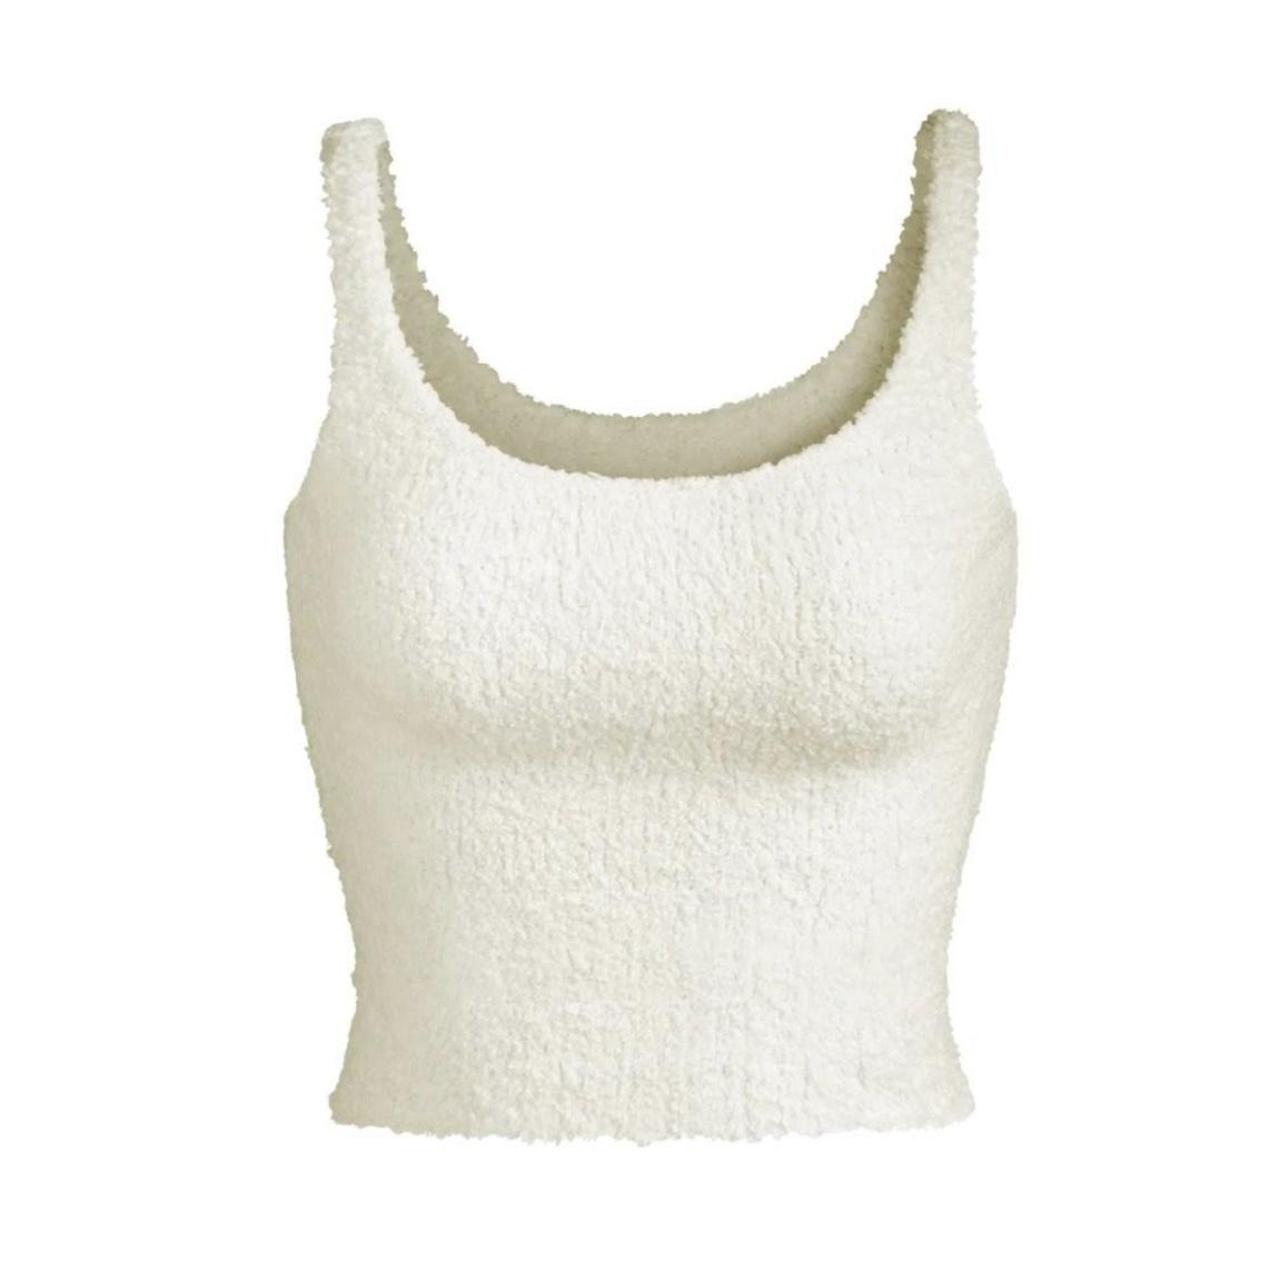 skims cozy knit tank top in white, size s/m - I'm - Depop